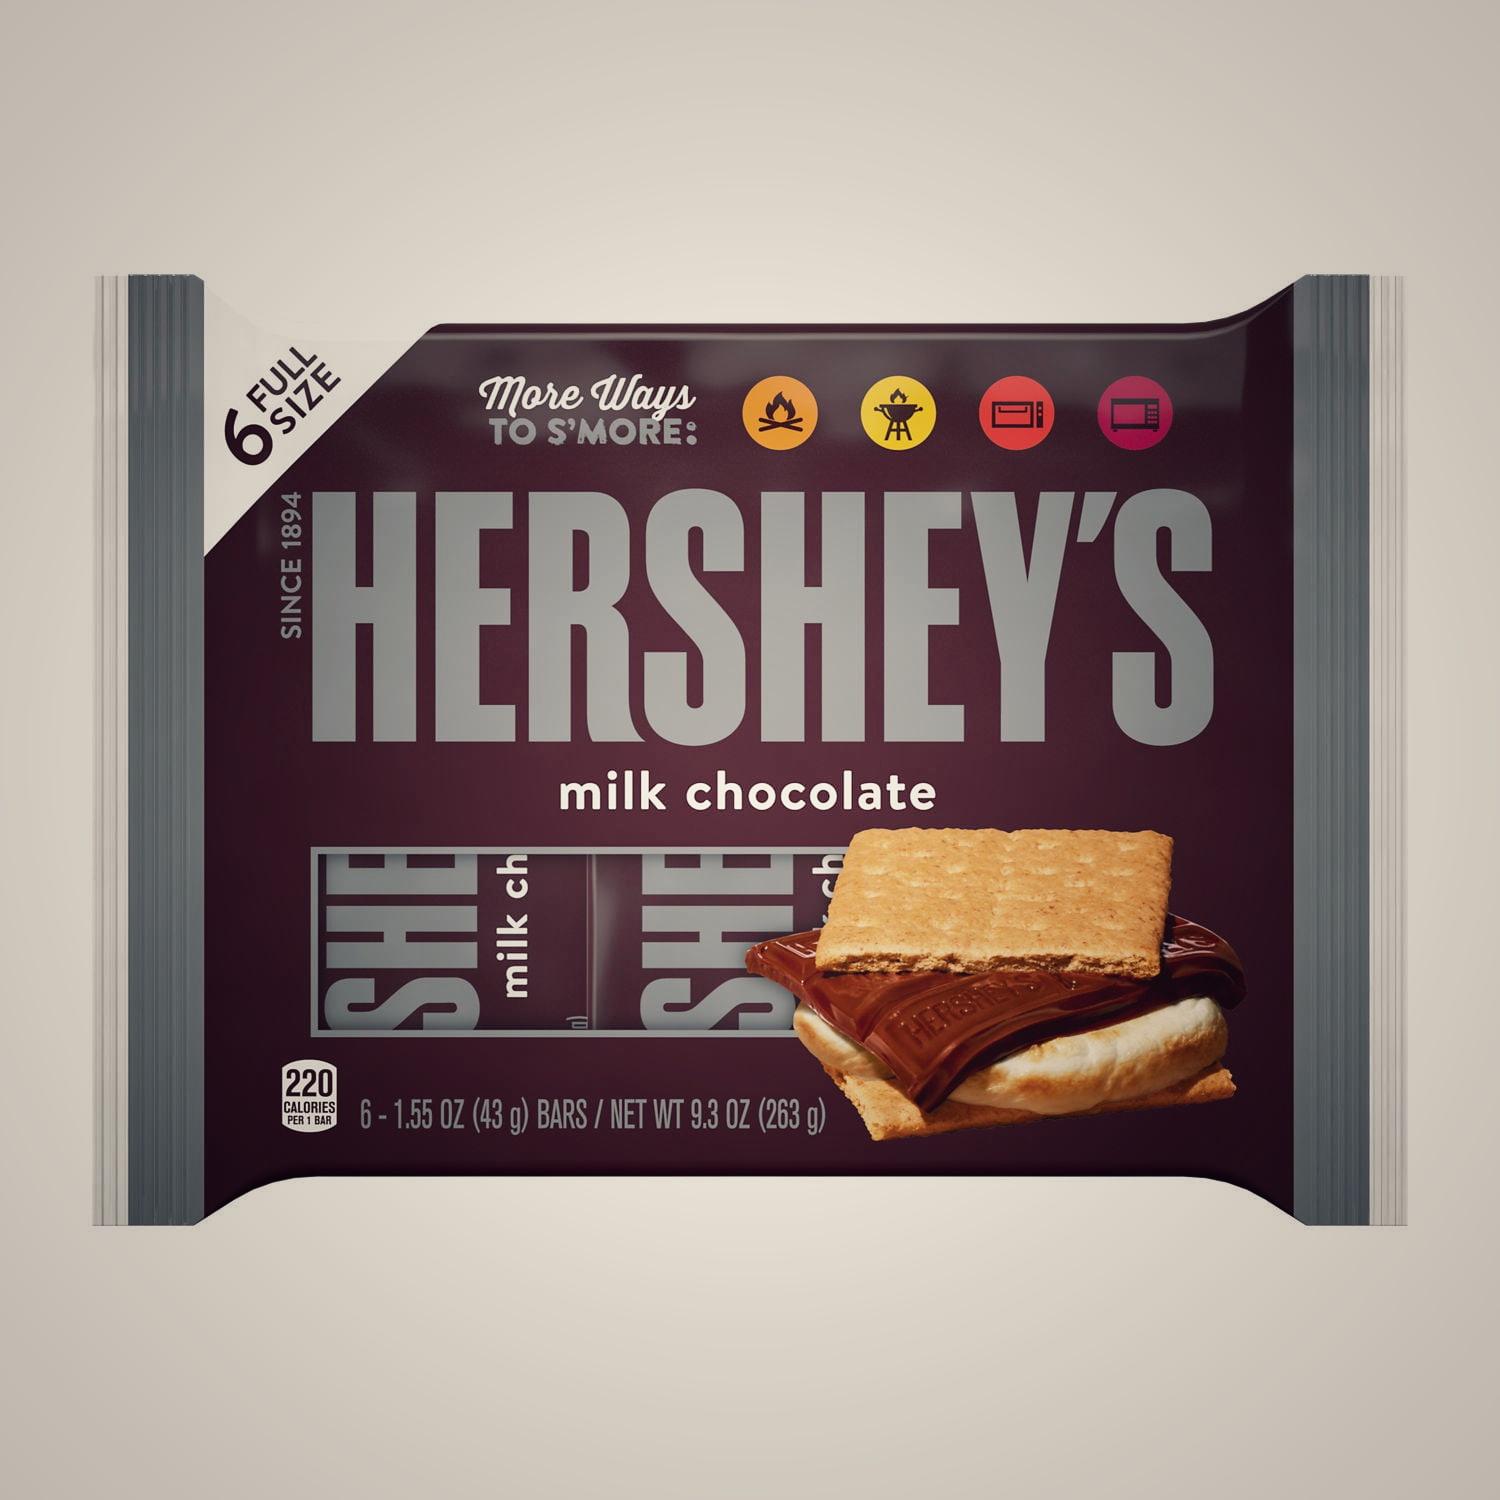 Hershey's Milk Chocolate with 6 full size